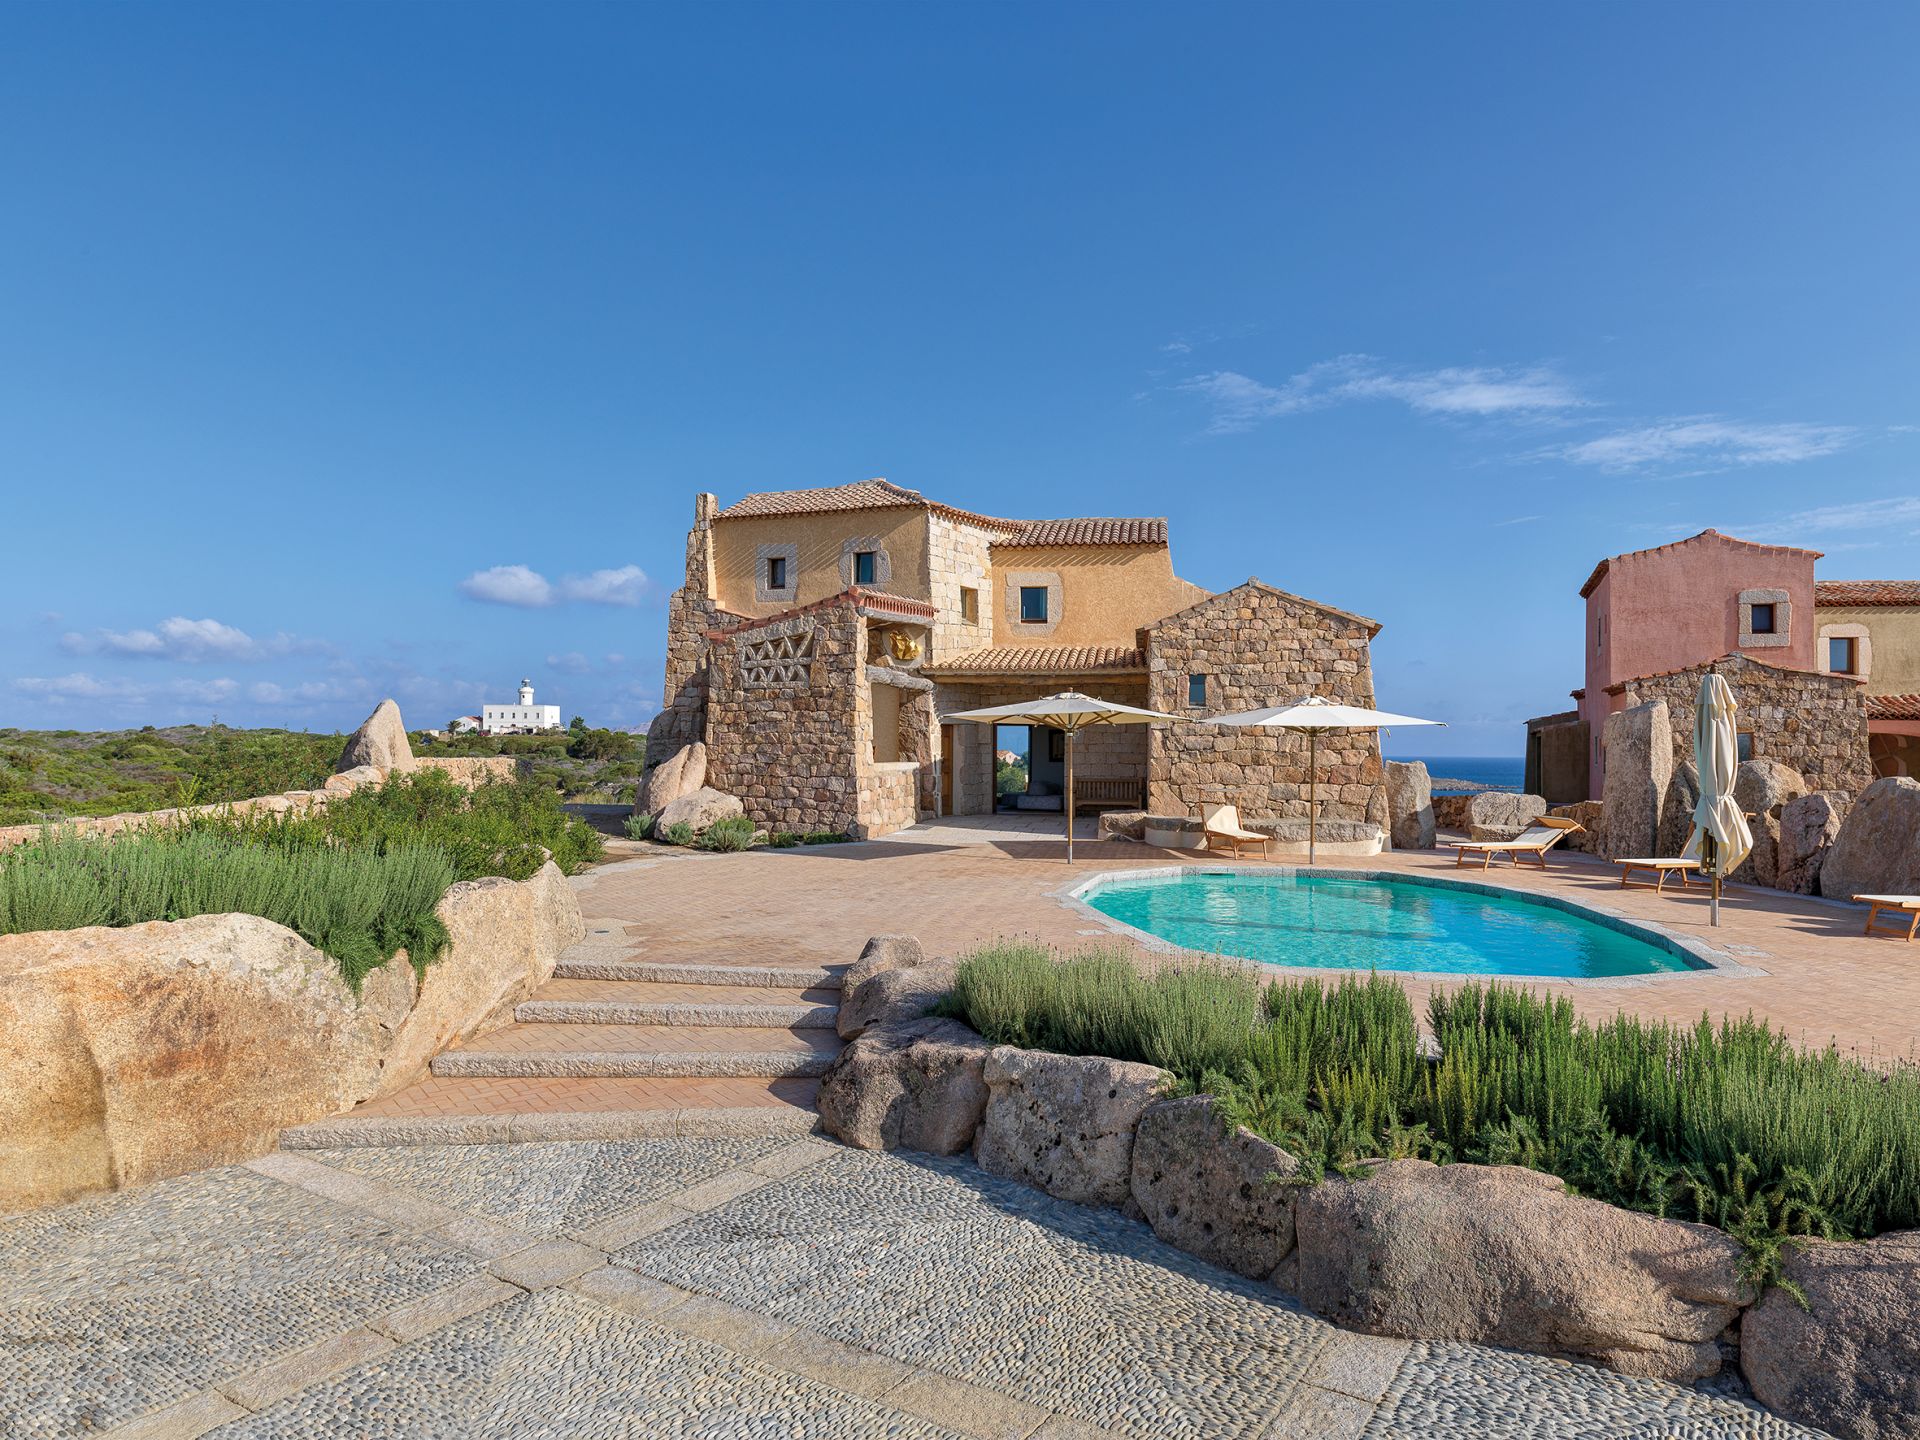 Villa in Sardegna - image 2